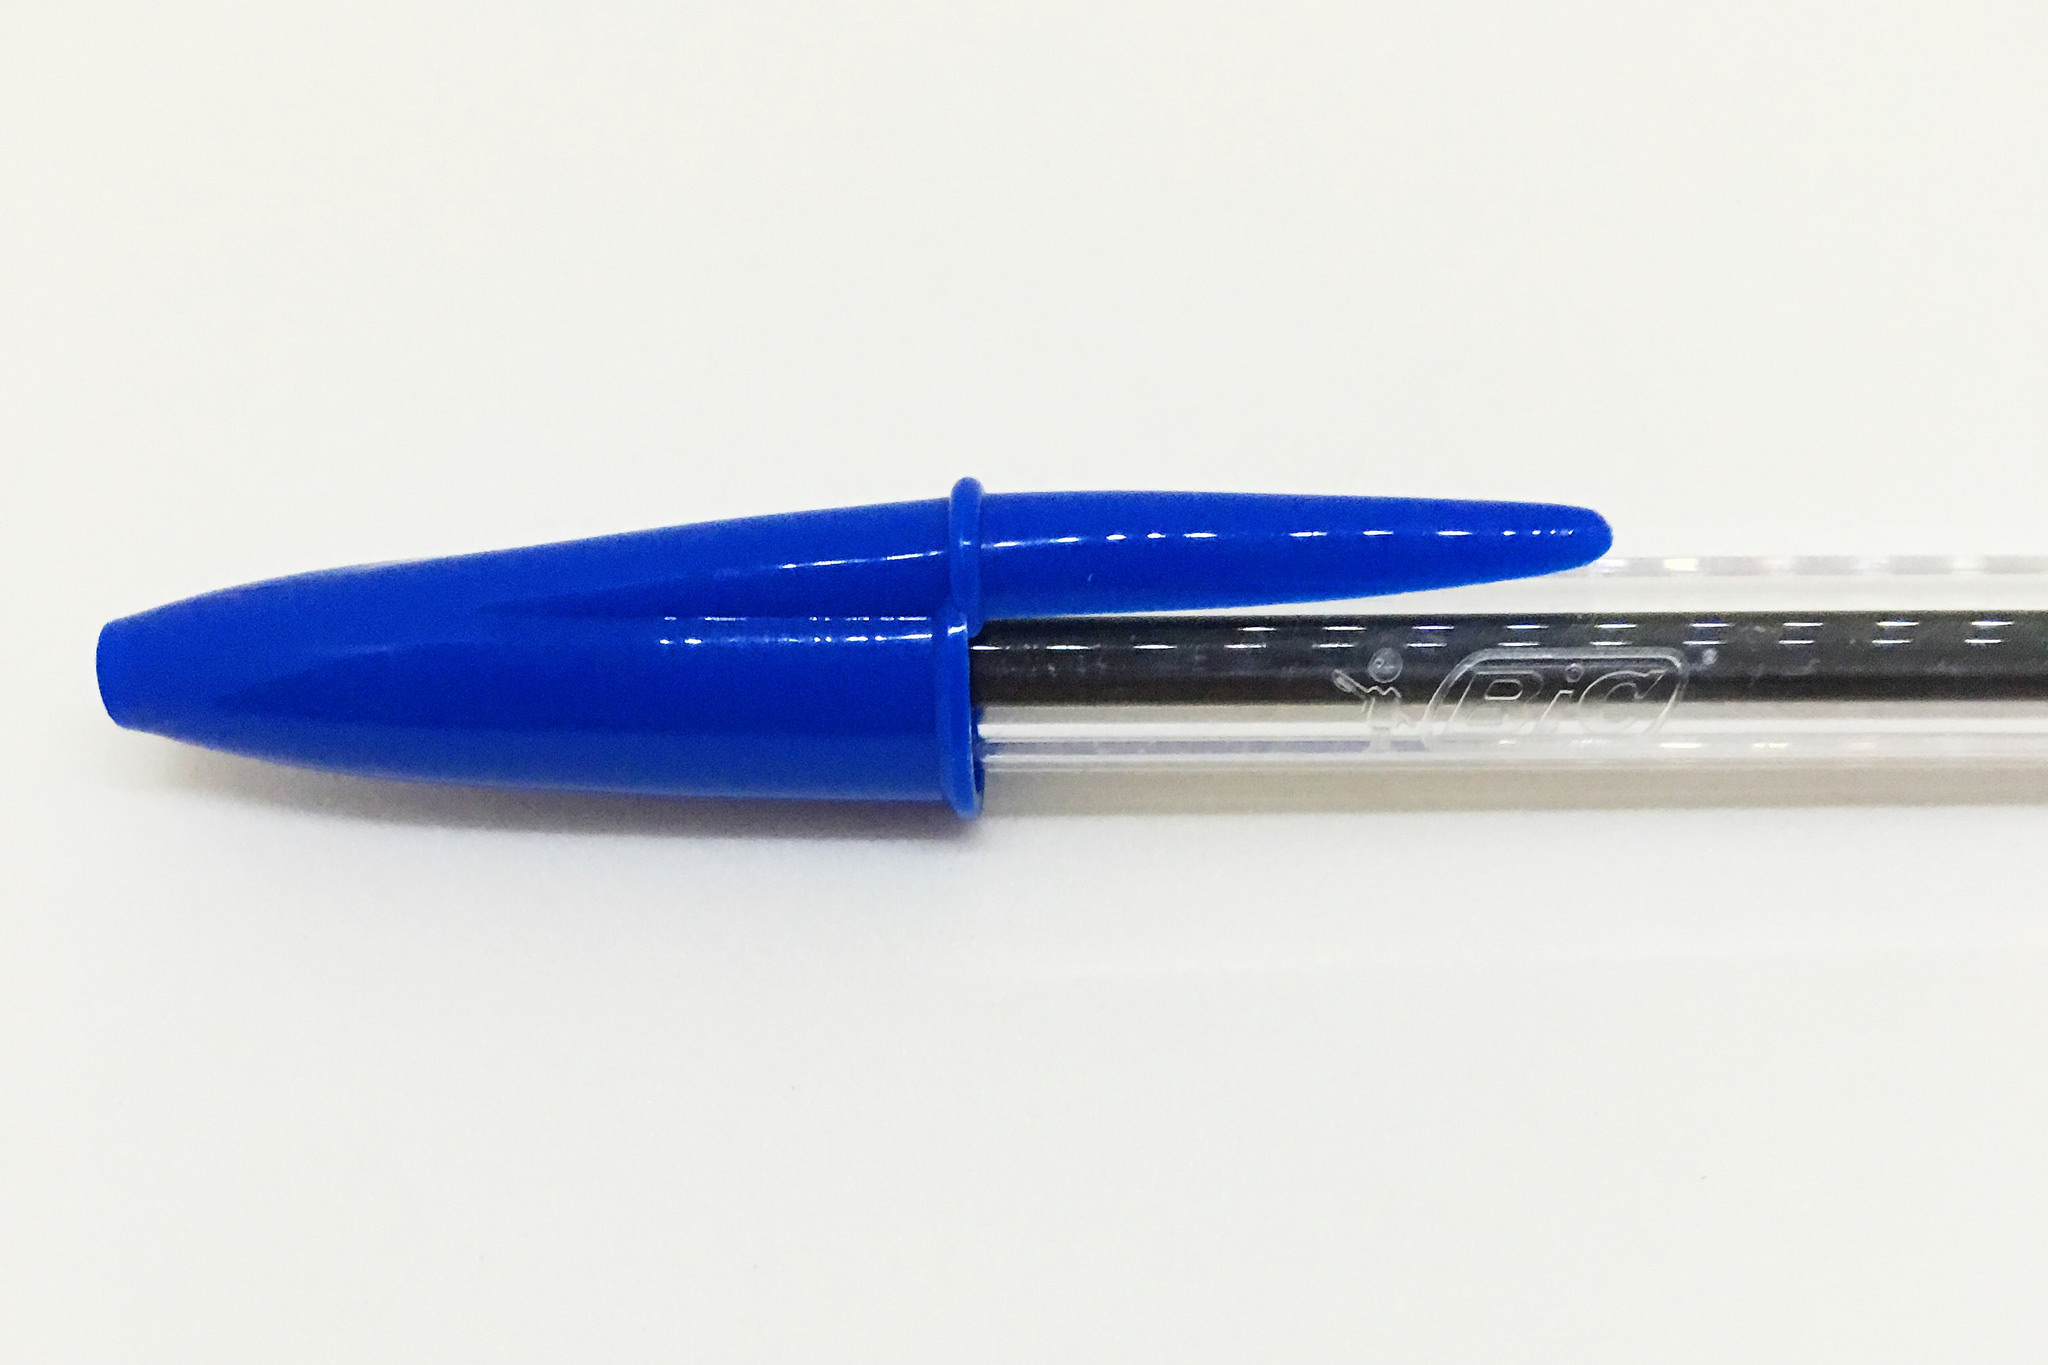 Bic Cristal Ballpoint Pen